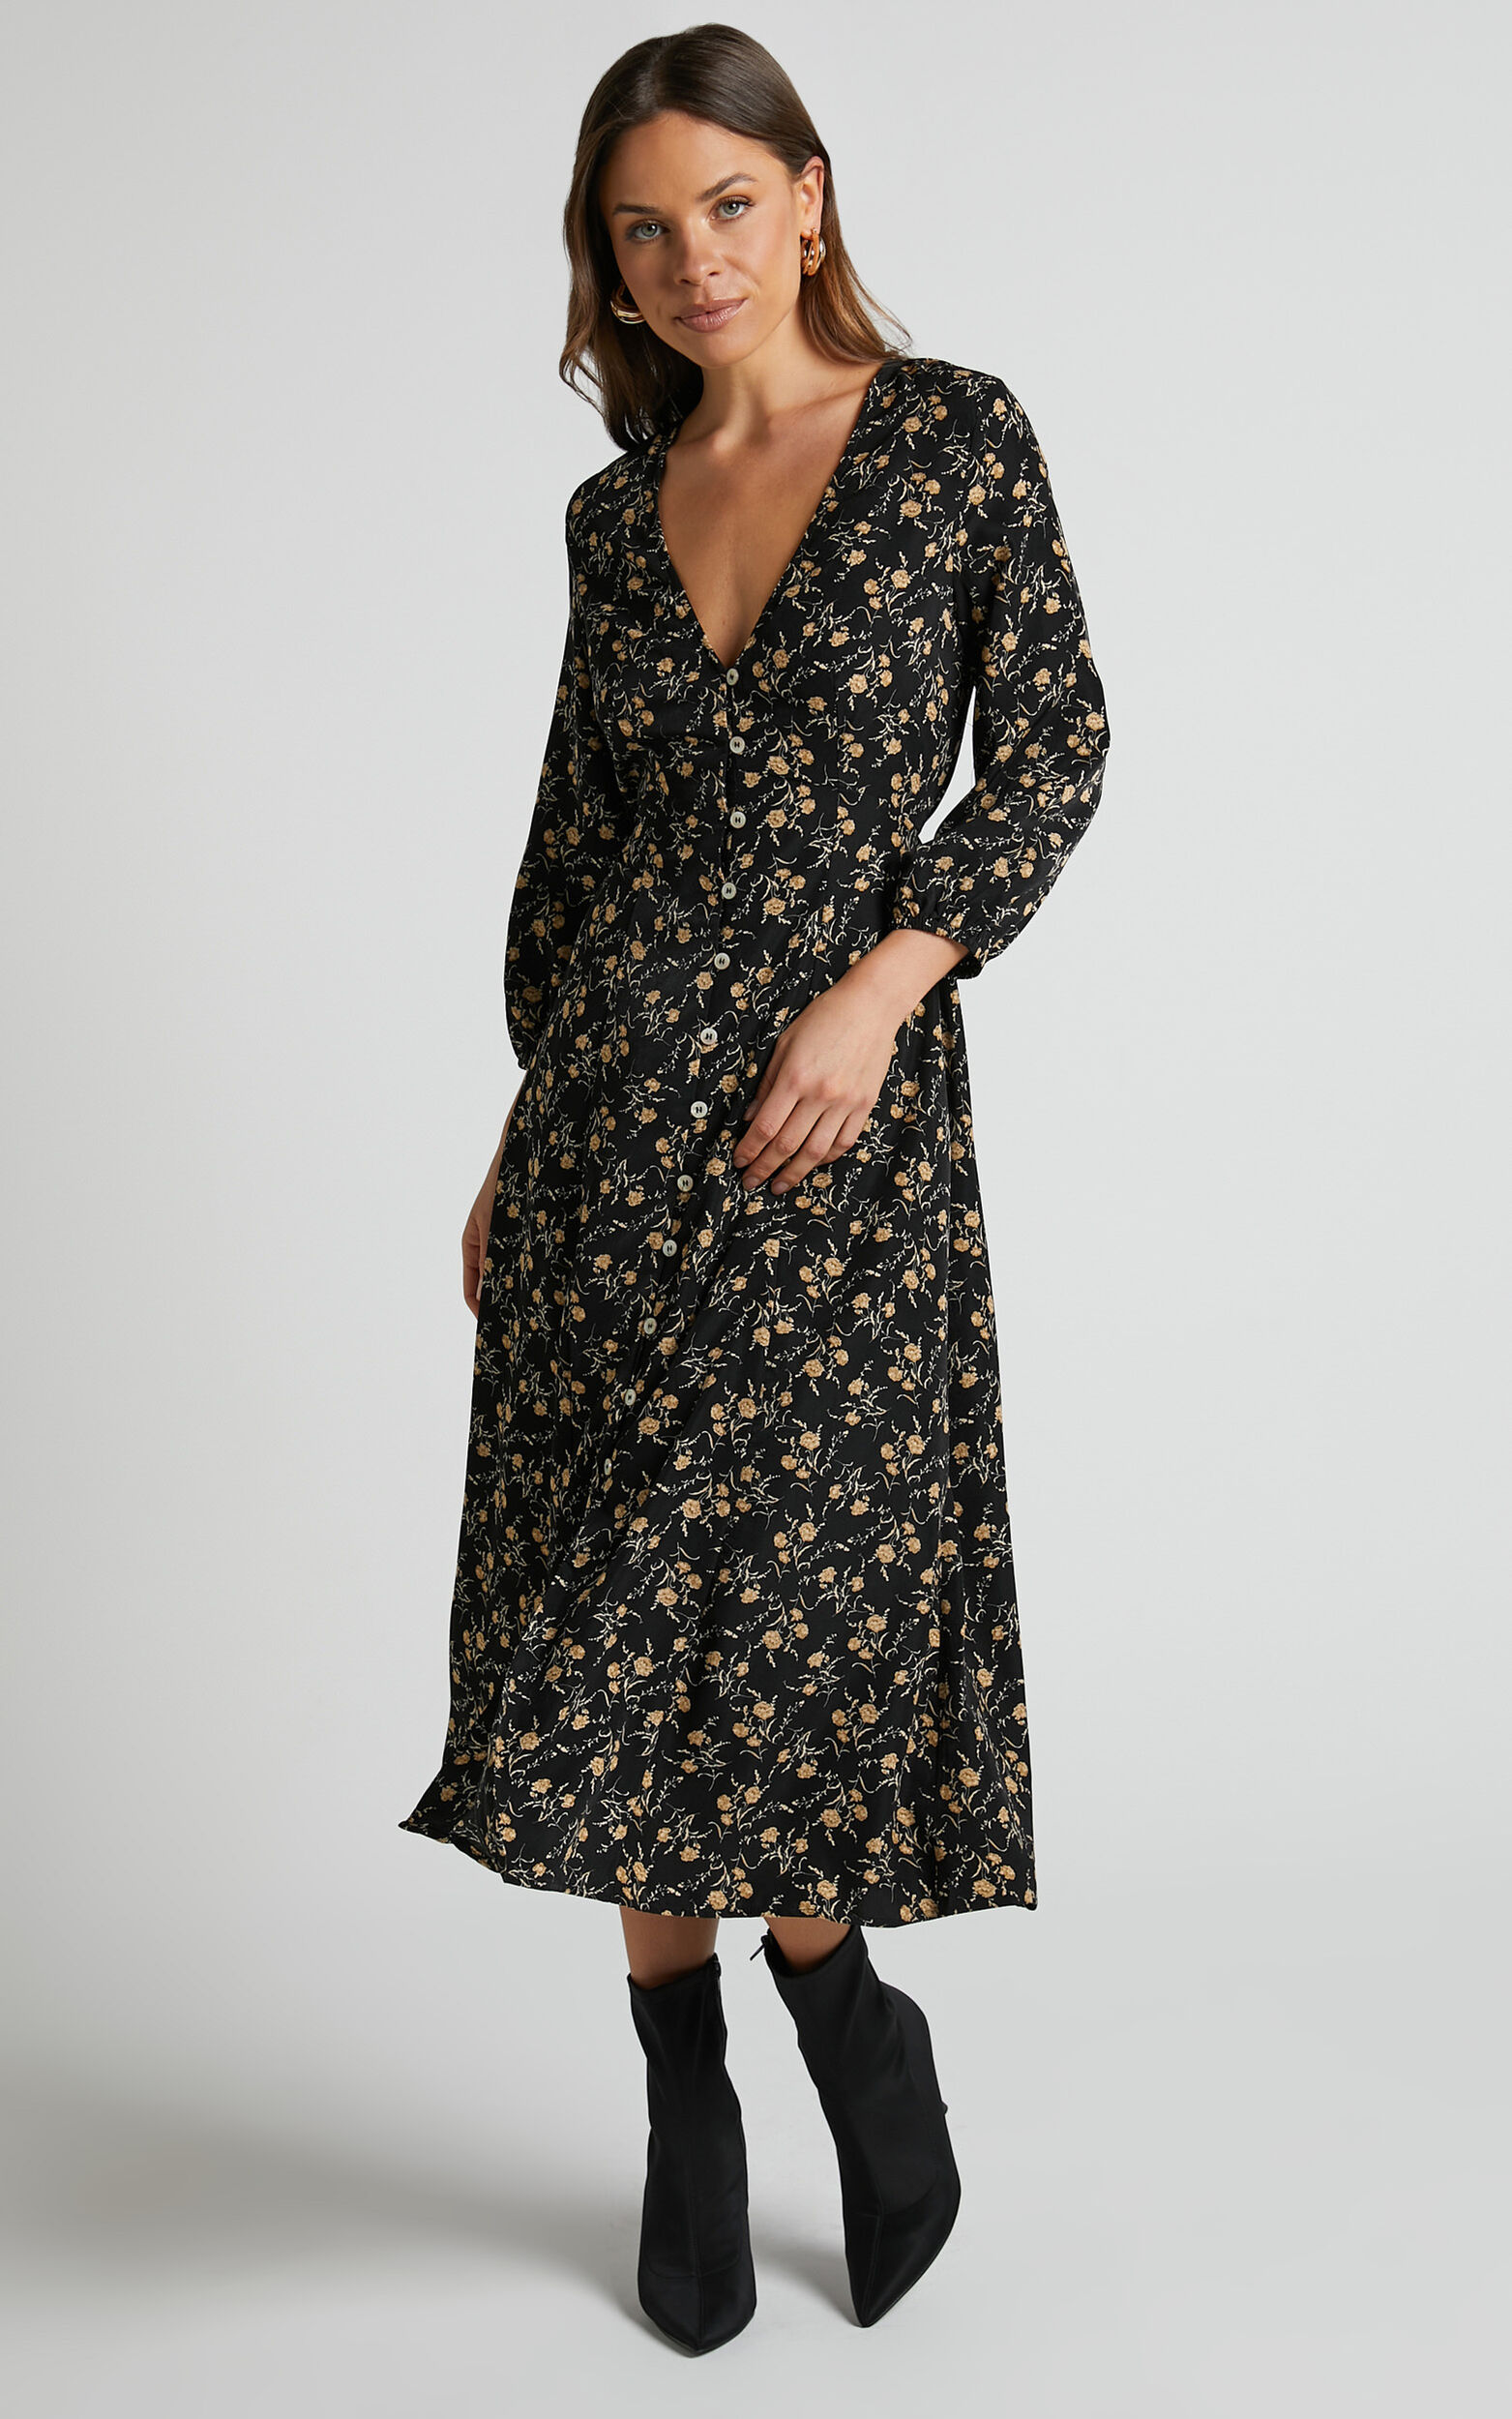 Dexter Midi Dress - Button Through Elastic Cuff Dress in Black Floral - 06, BLK1